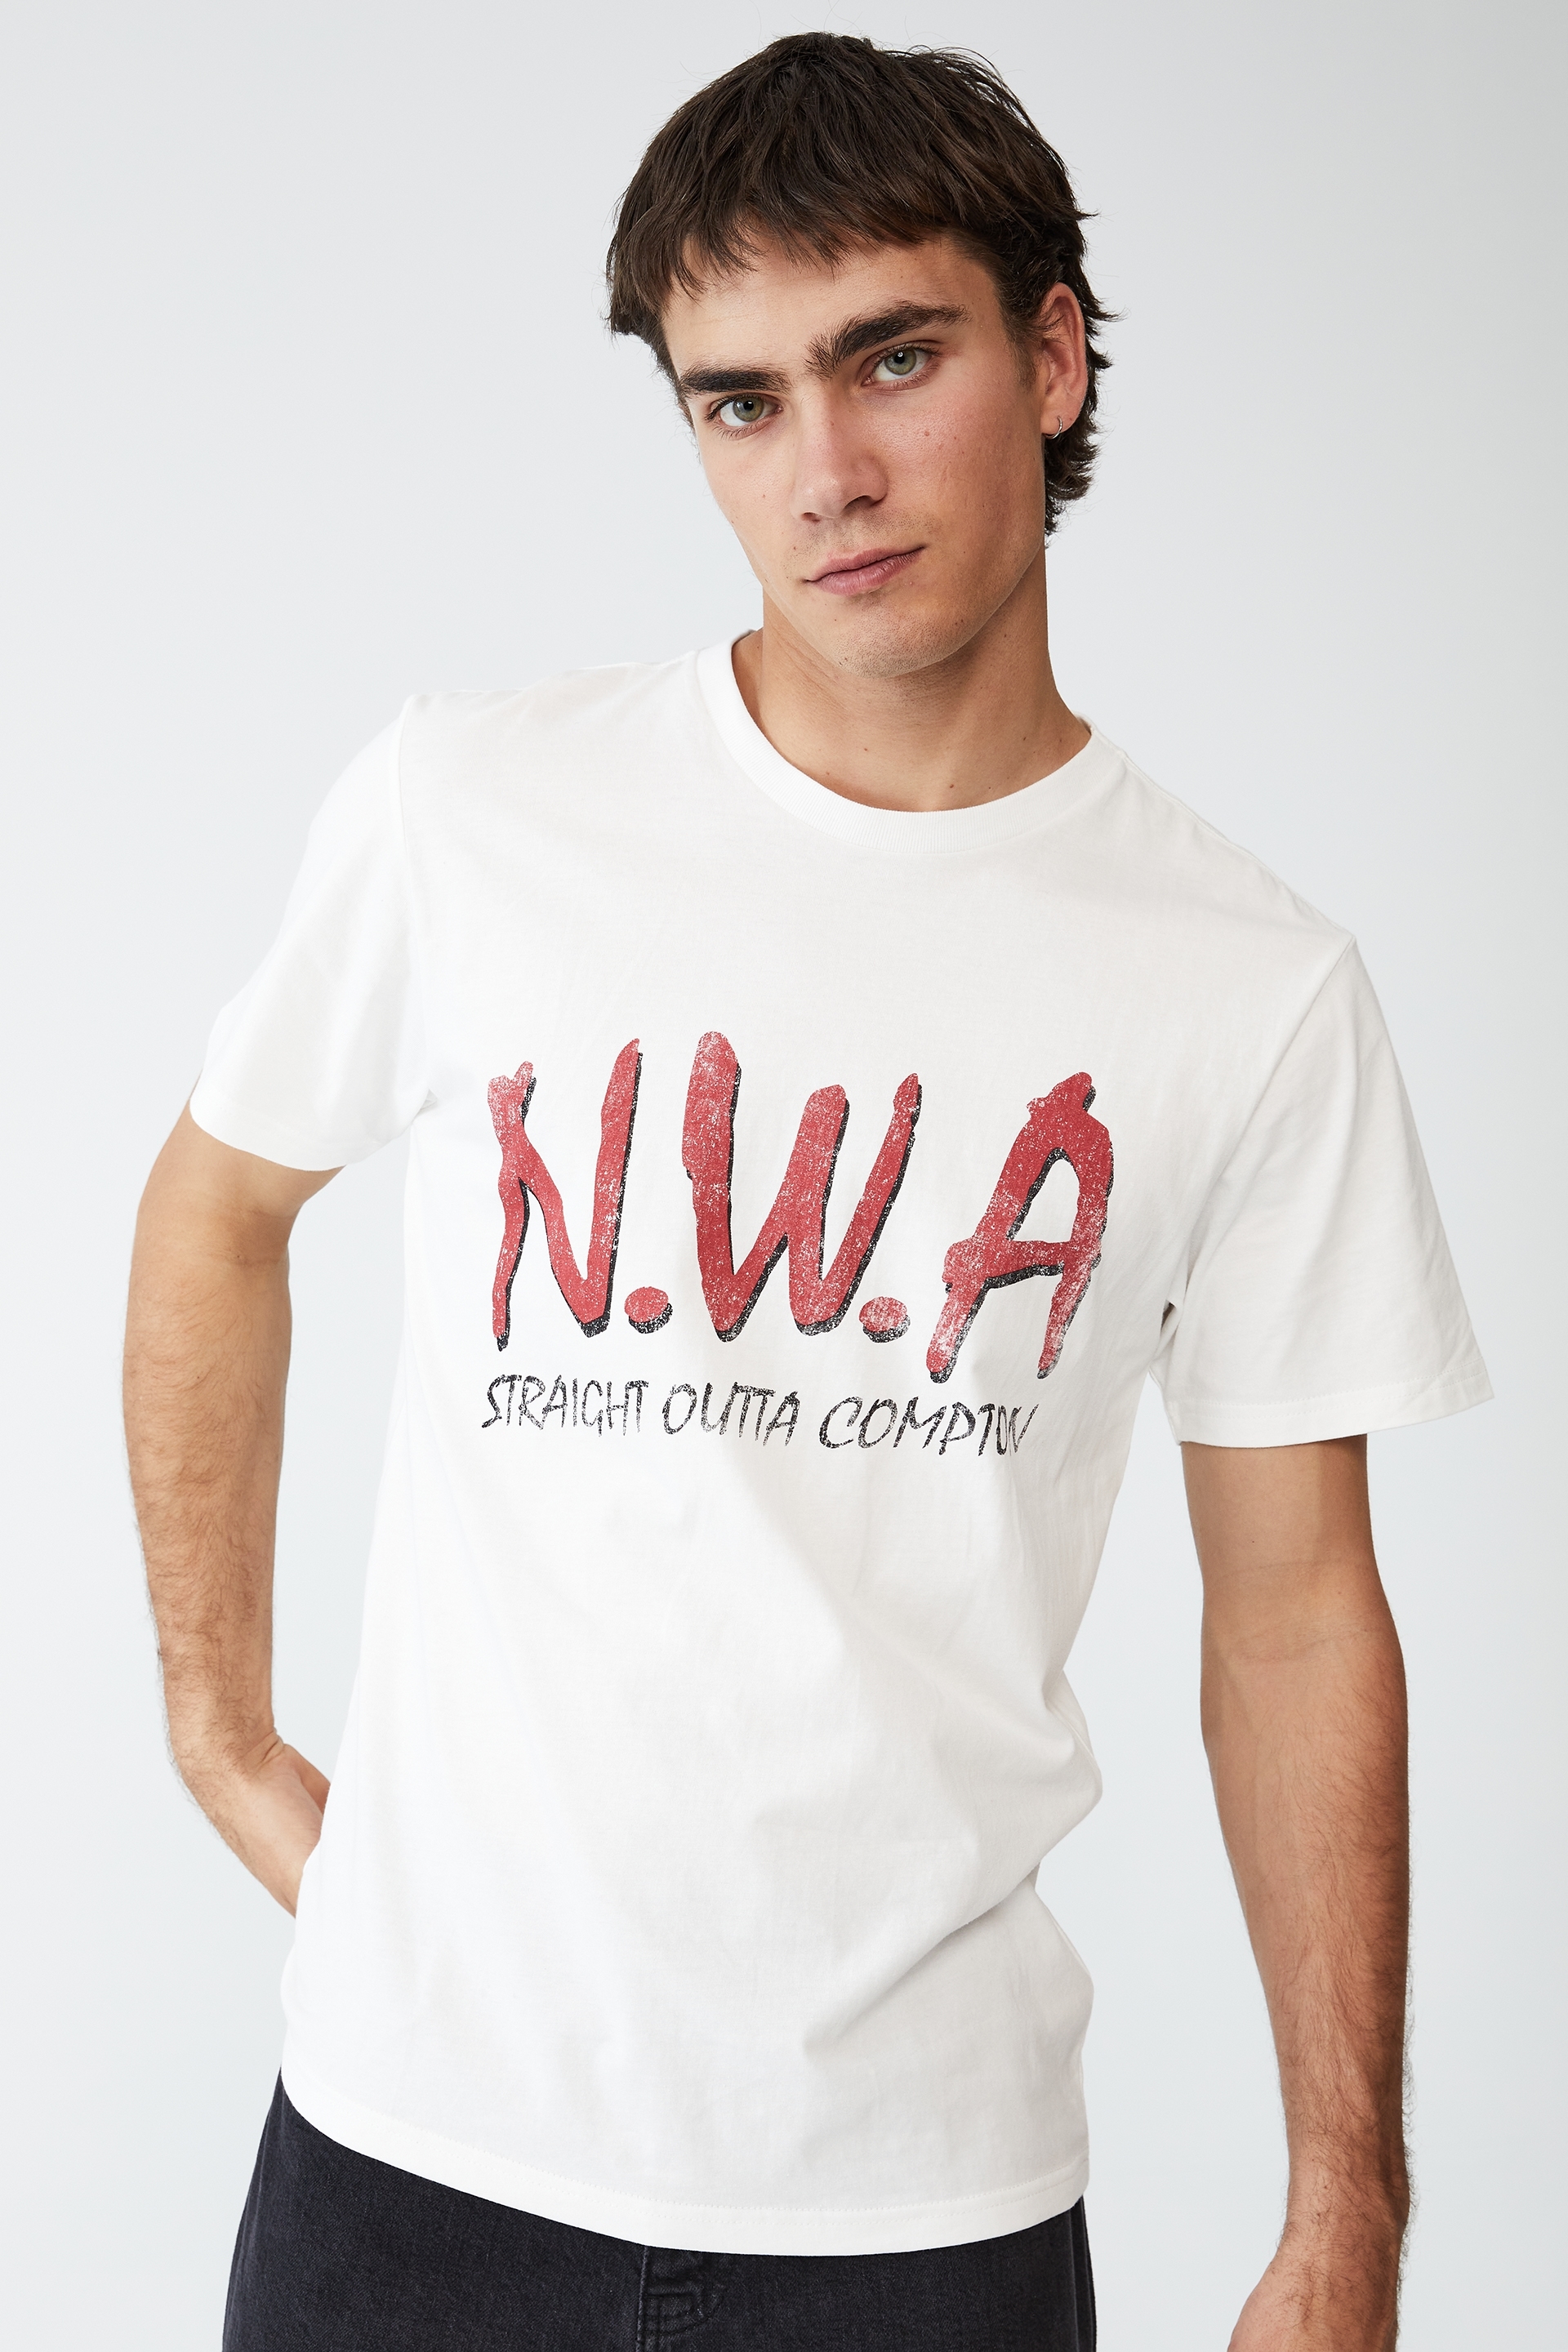 Cotton On Men - Tbar Collab Music T-Shirt - Lcn mt vintage white/nwa - straight outta com